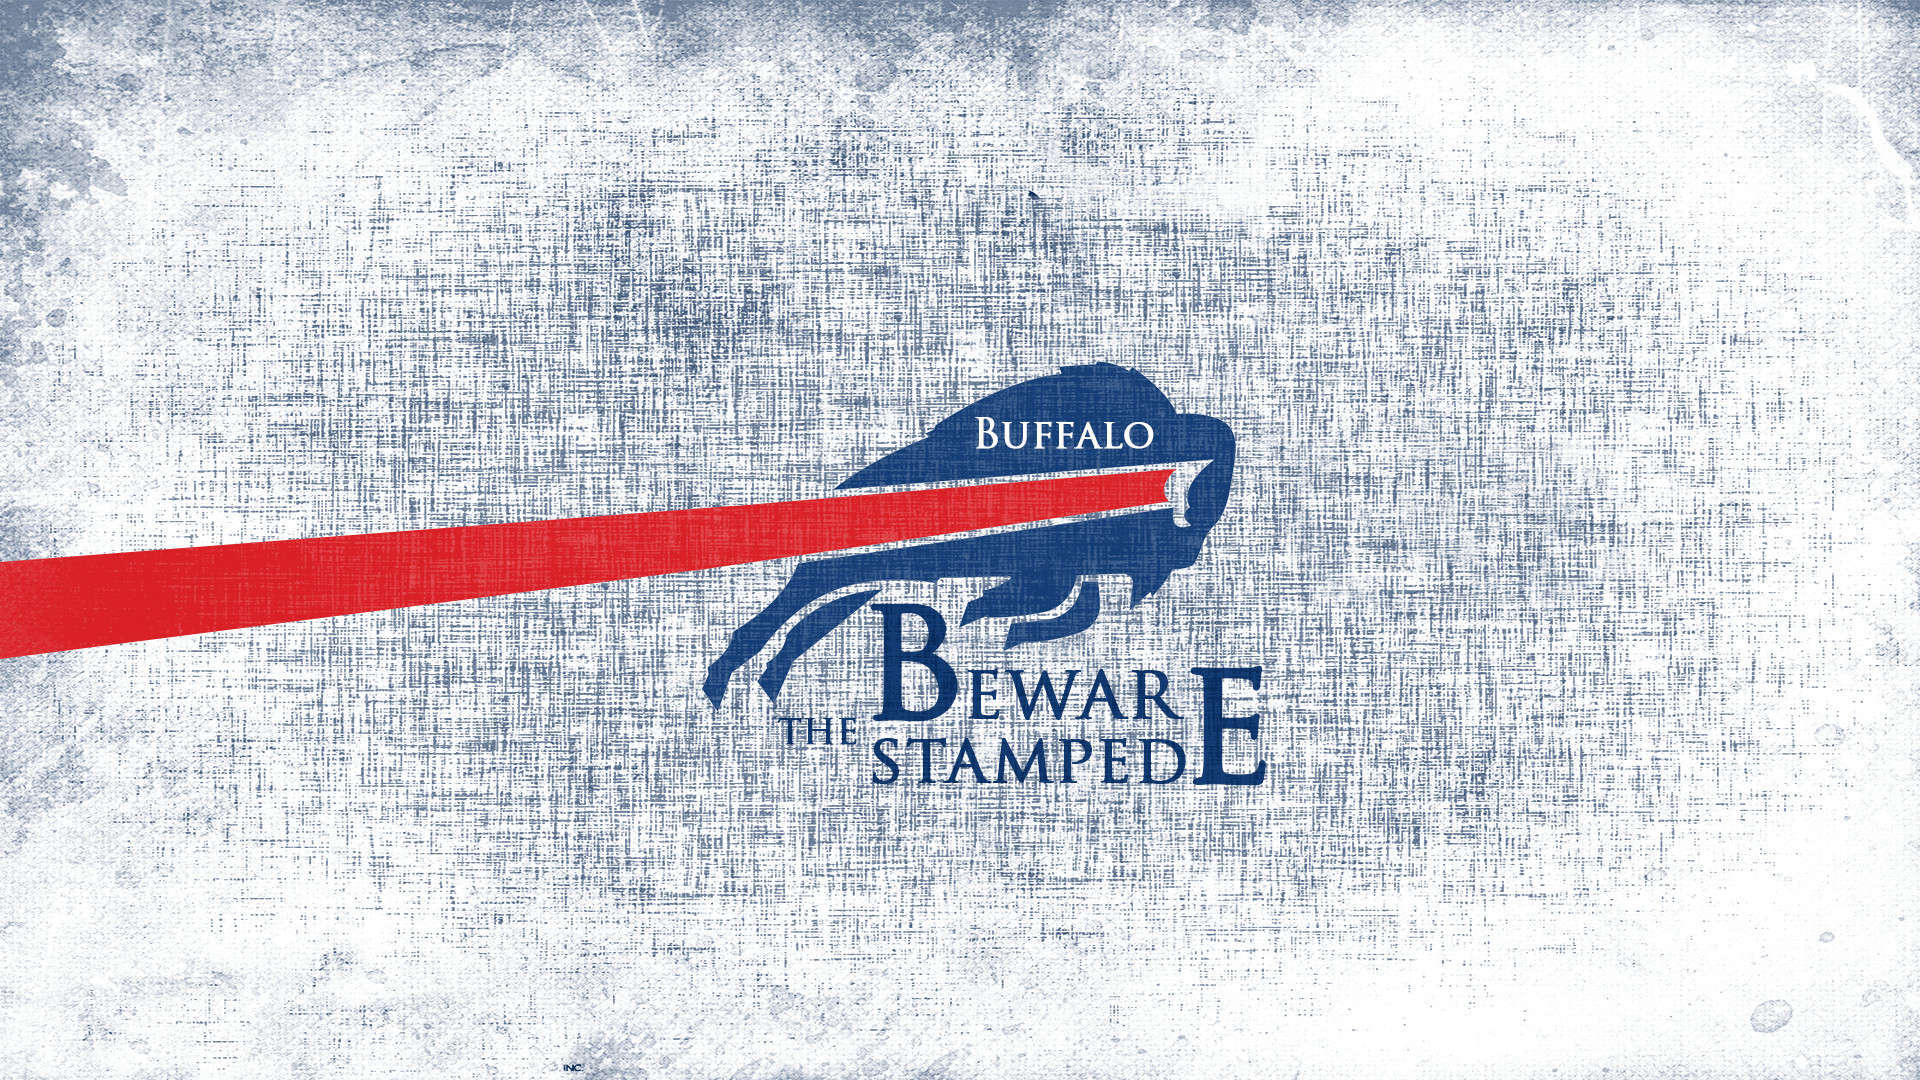 Download Buffalo Bills Logo NFL Wallpaper HD in high quality